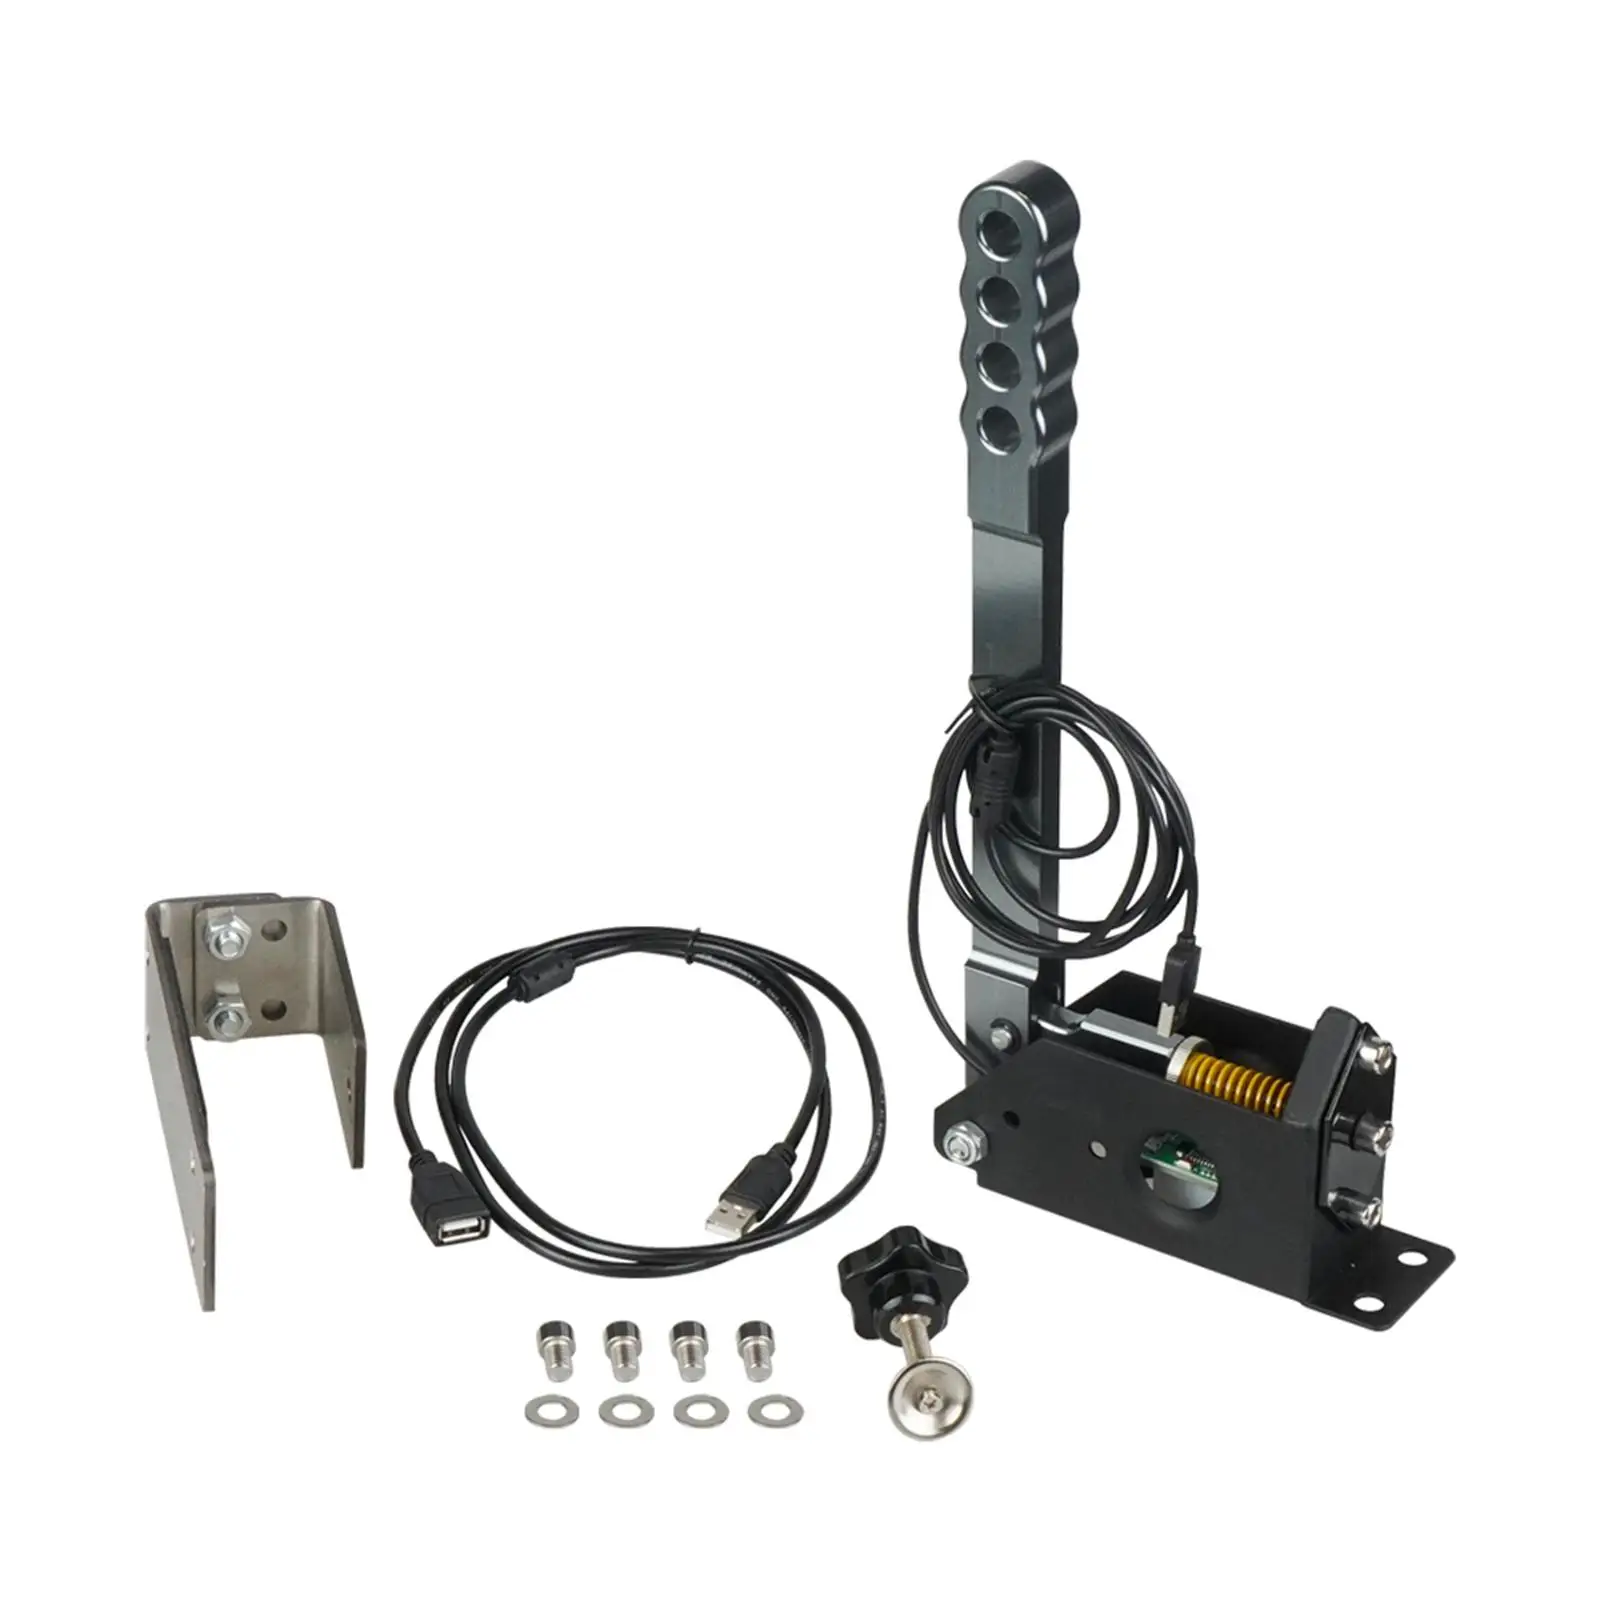 Handbrake Hall Sensor Durable with Fixing Clip Anti Wear Premium for Logitech G29 G27 G25 PC Racing Games